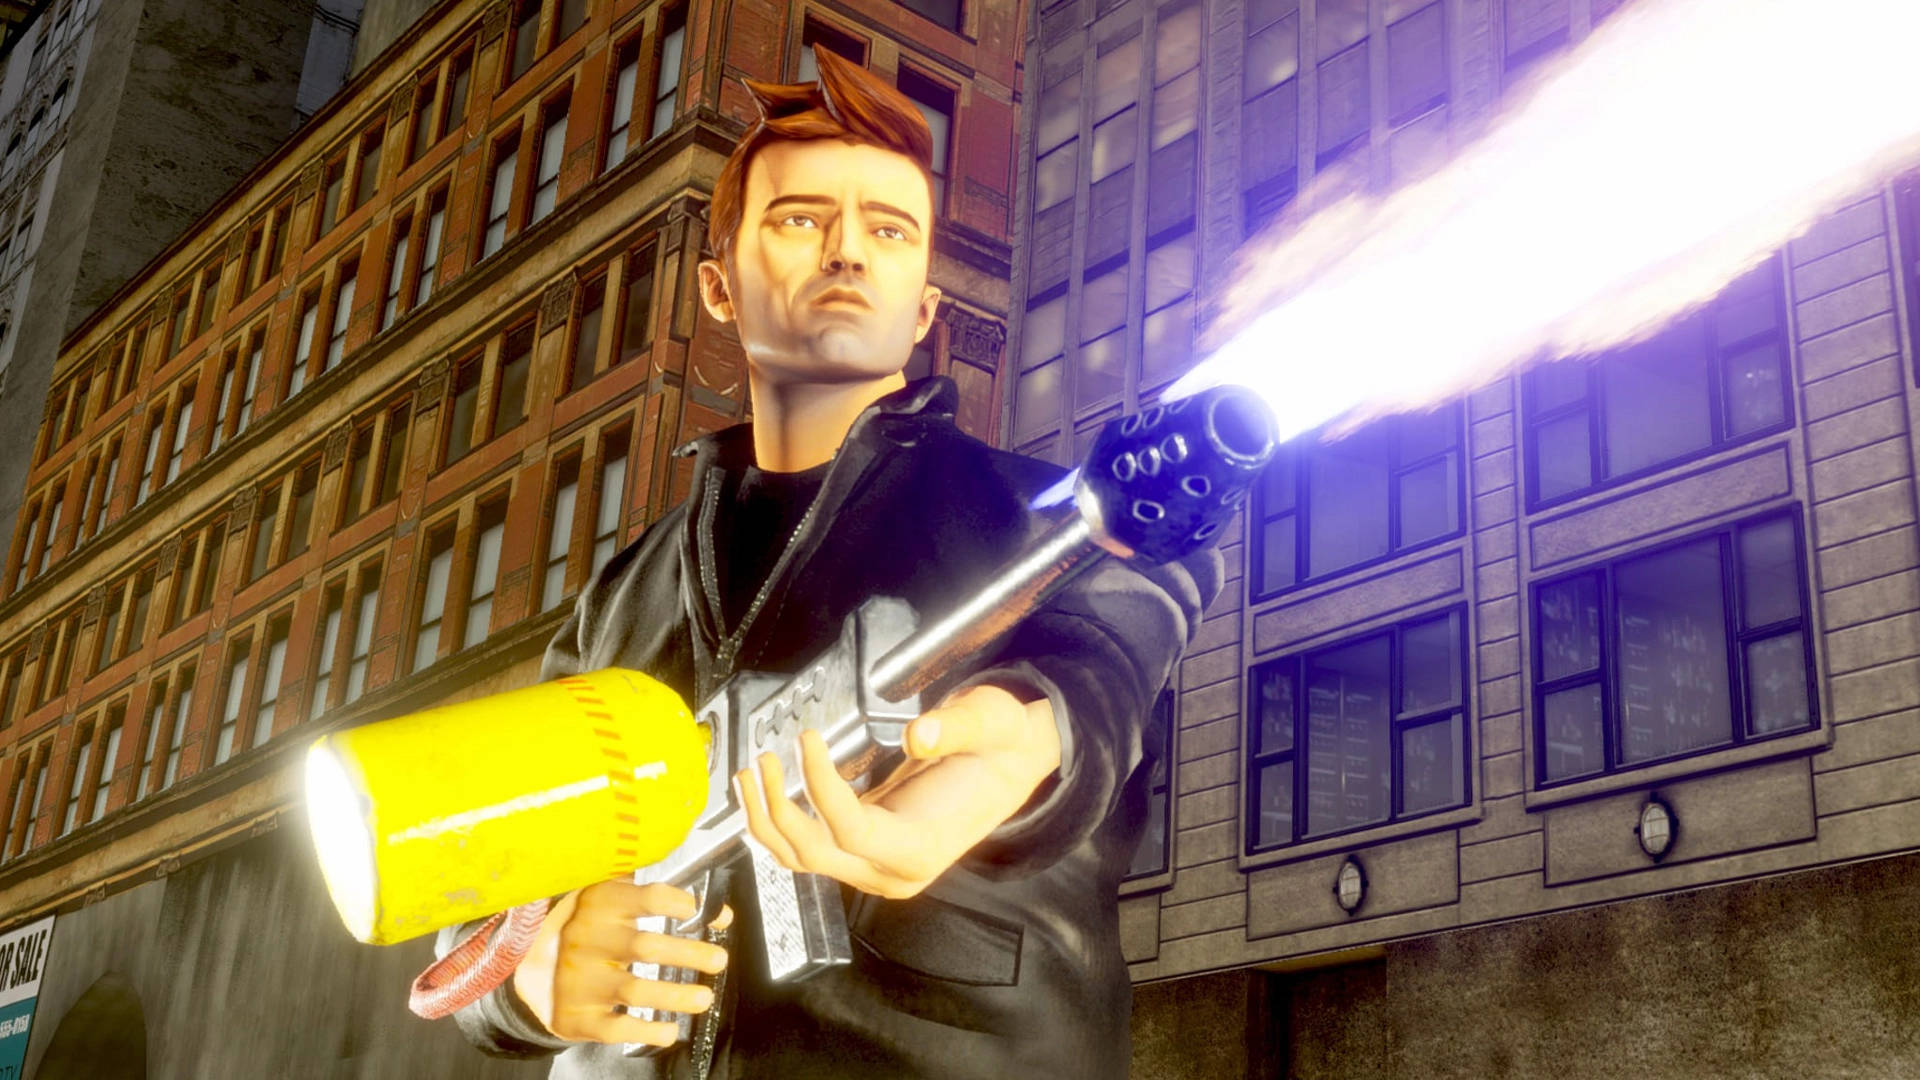 Jetpack [Grand Theft Auto: Vice City] [Mods]